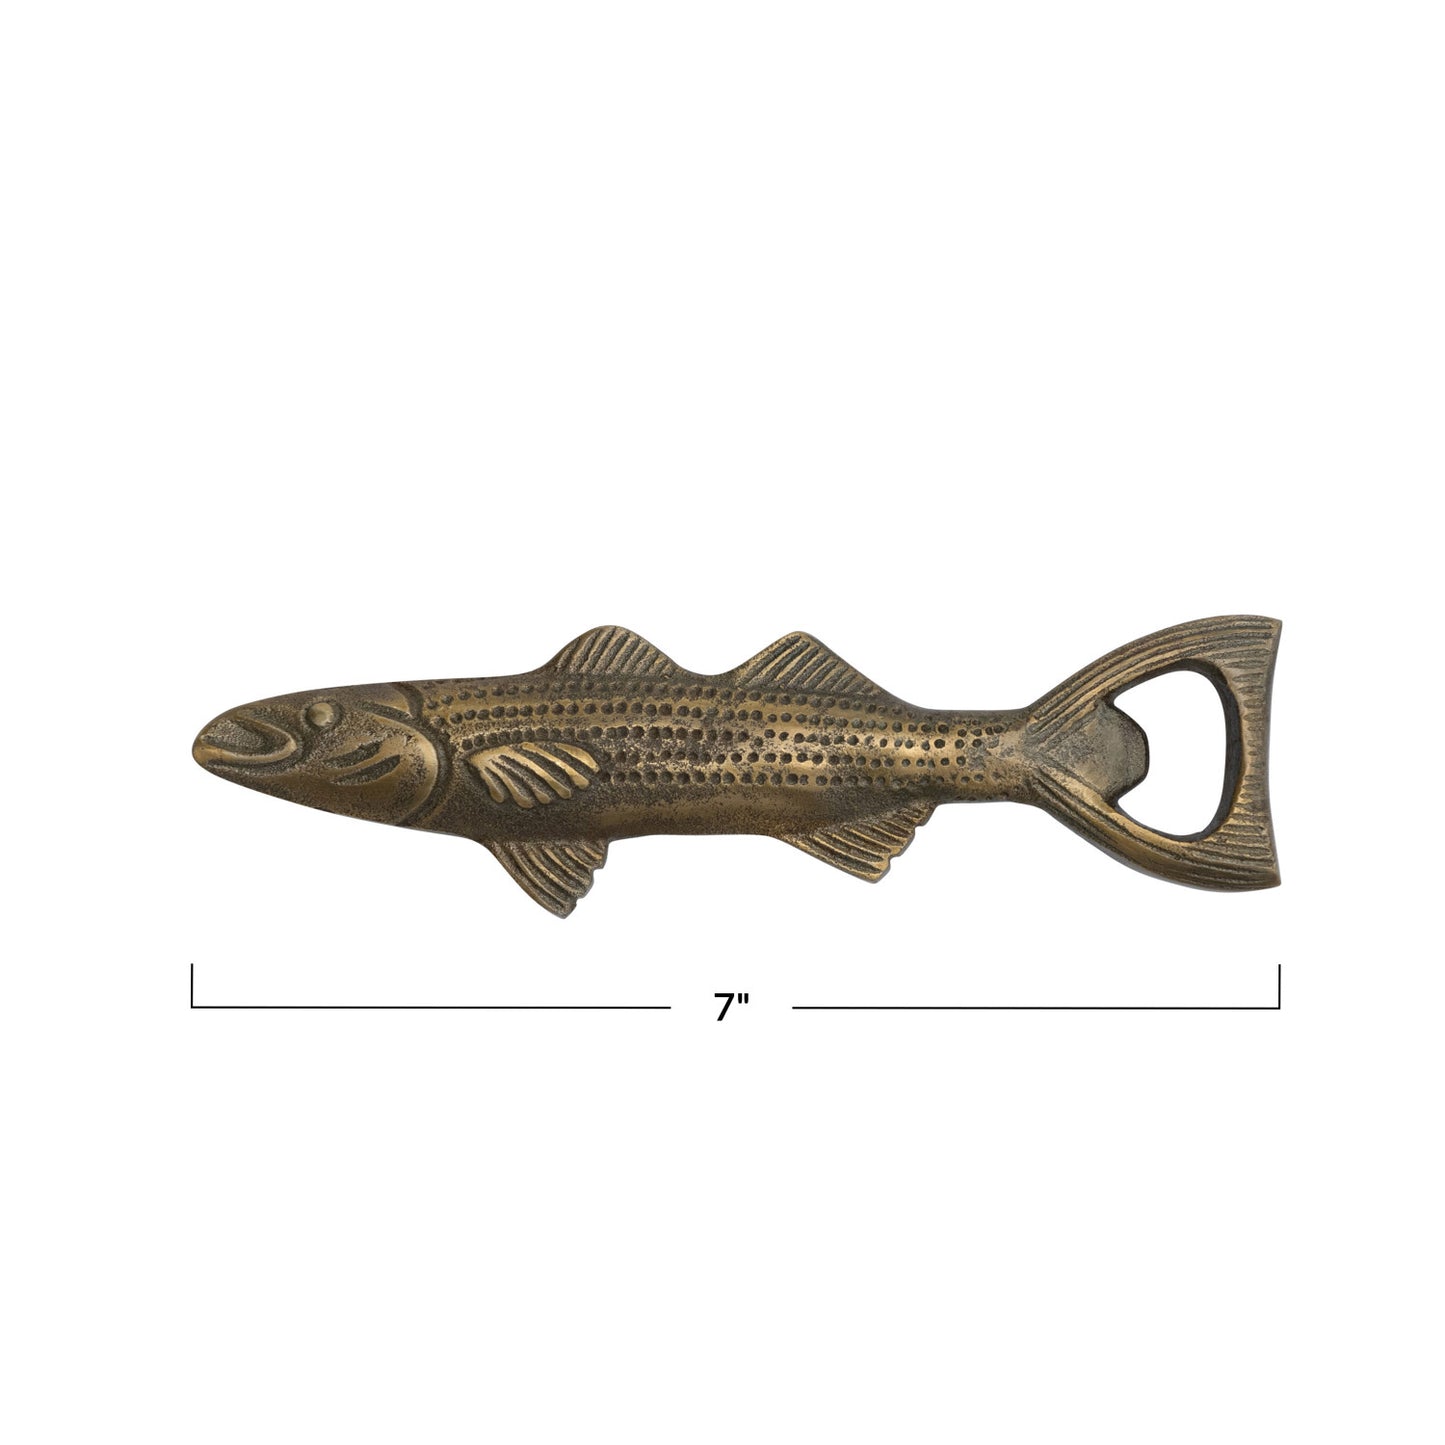 Cast Aluminum Fish Shaped Bottle Opener, Antique Gold Finish